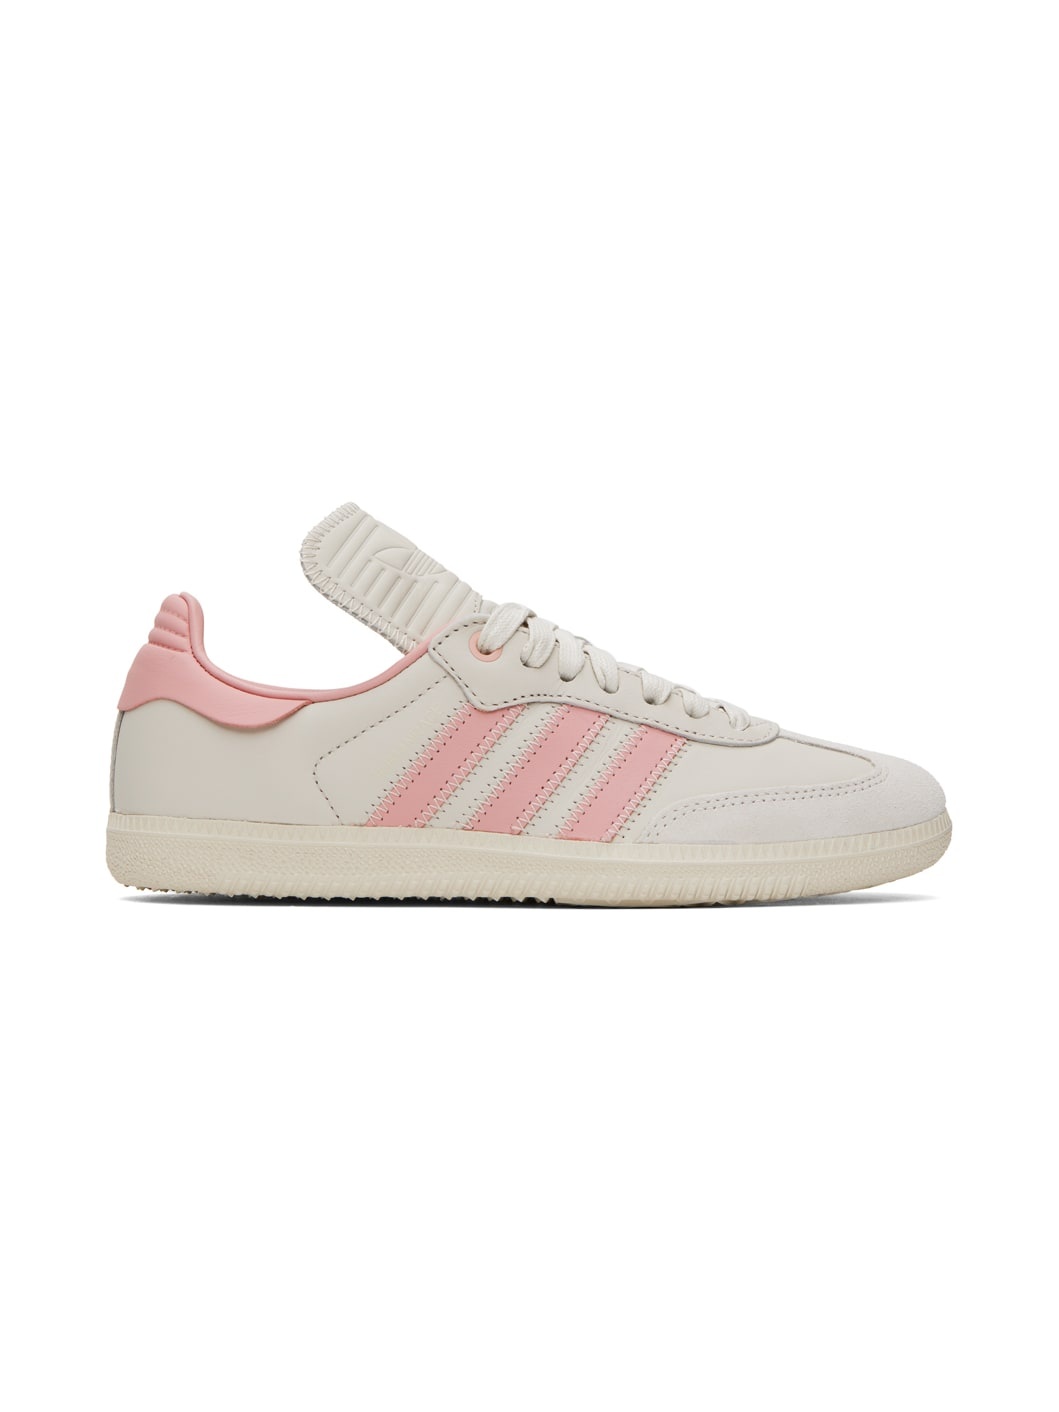 Off-White & Pink Humanrace Samba Sneakers - 1